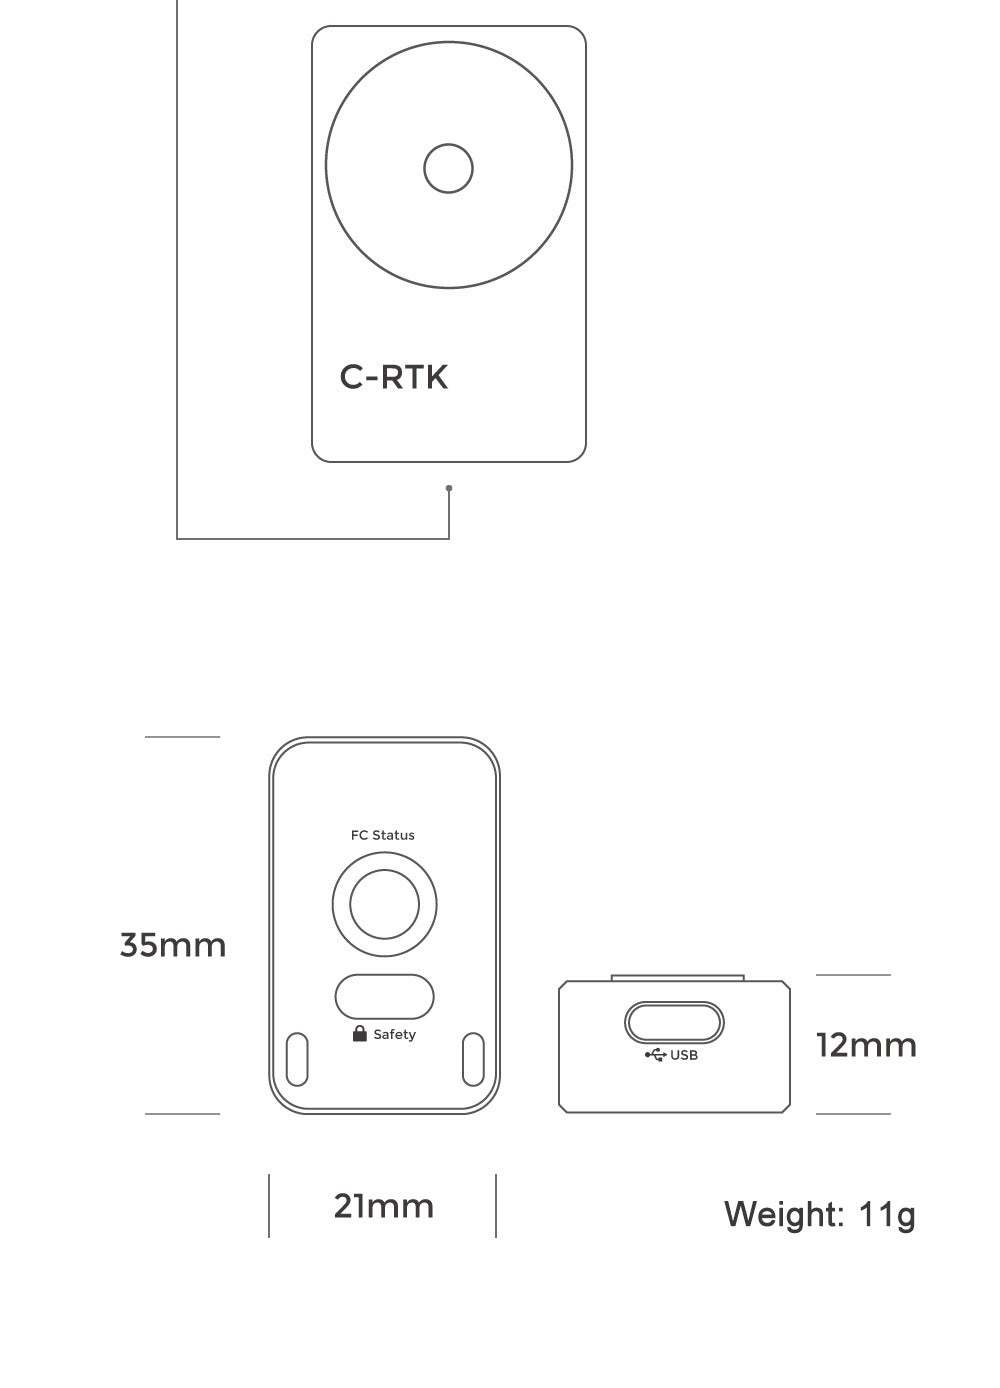 CUAV C-RTK 9P Expansion Module, C-RTK FC Status 35mm Safety €USB 12mm 2Imm Weight: